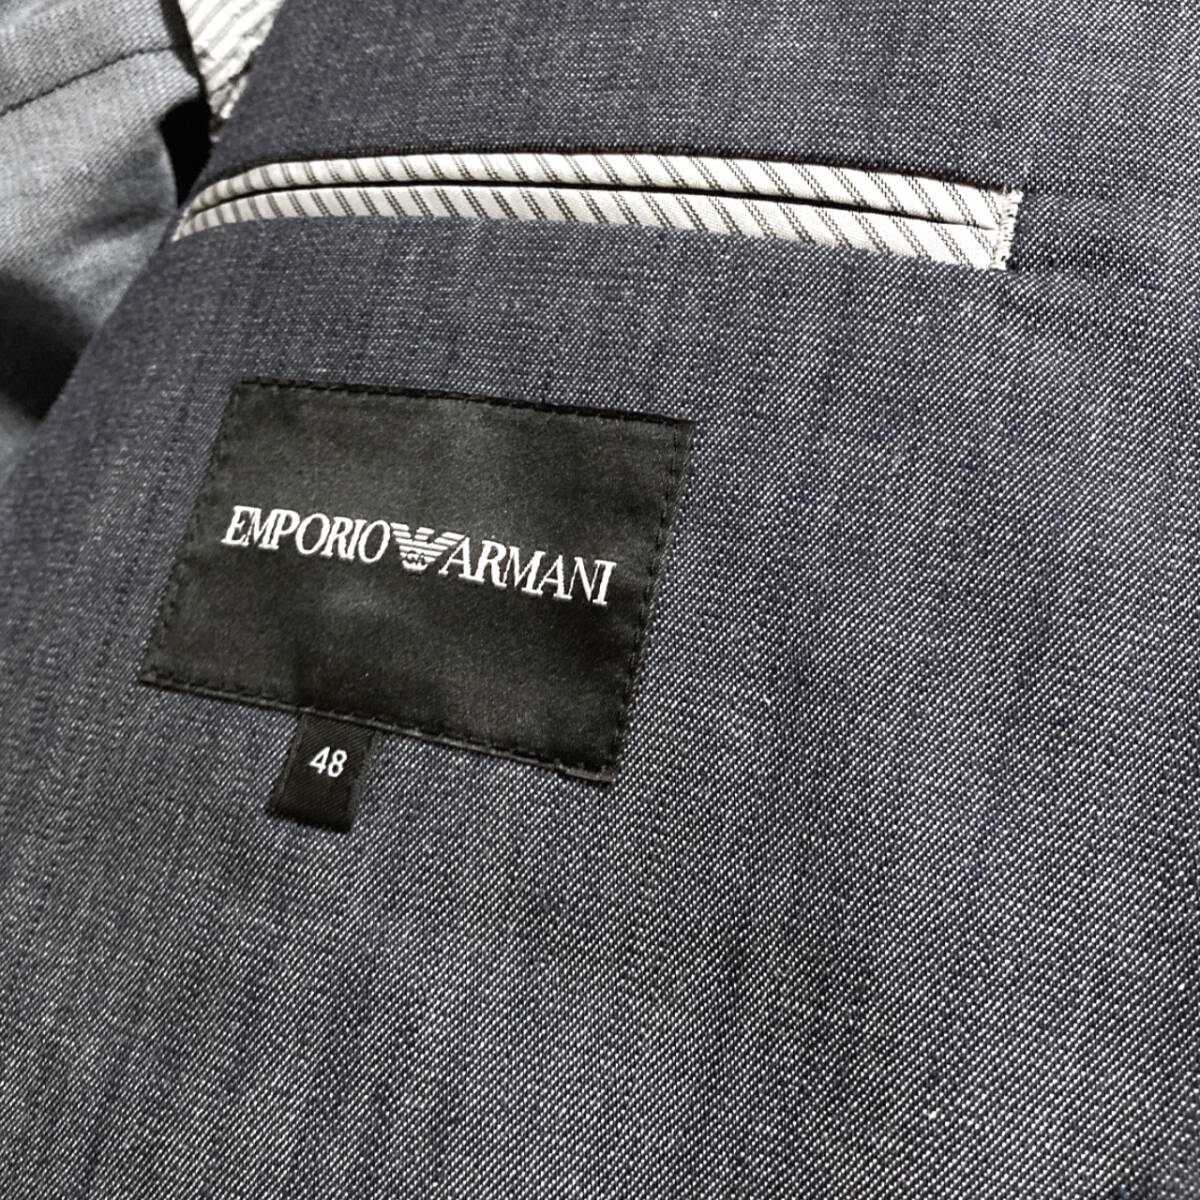 65Y240515T unused EMPORIO ARMANI Emporio Armani men's cotton jacket inspection cardigan blouson leather coat business 